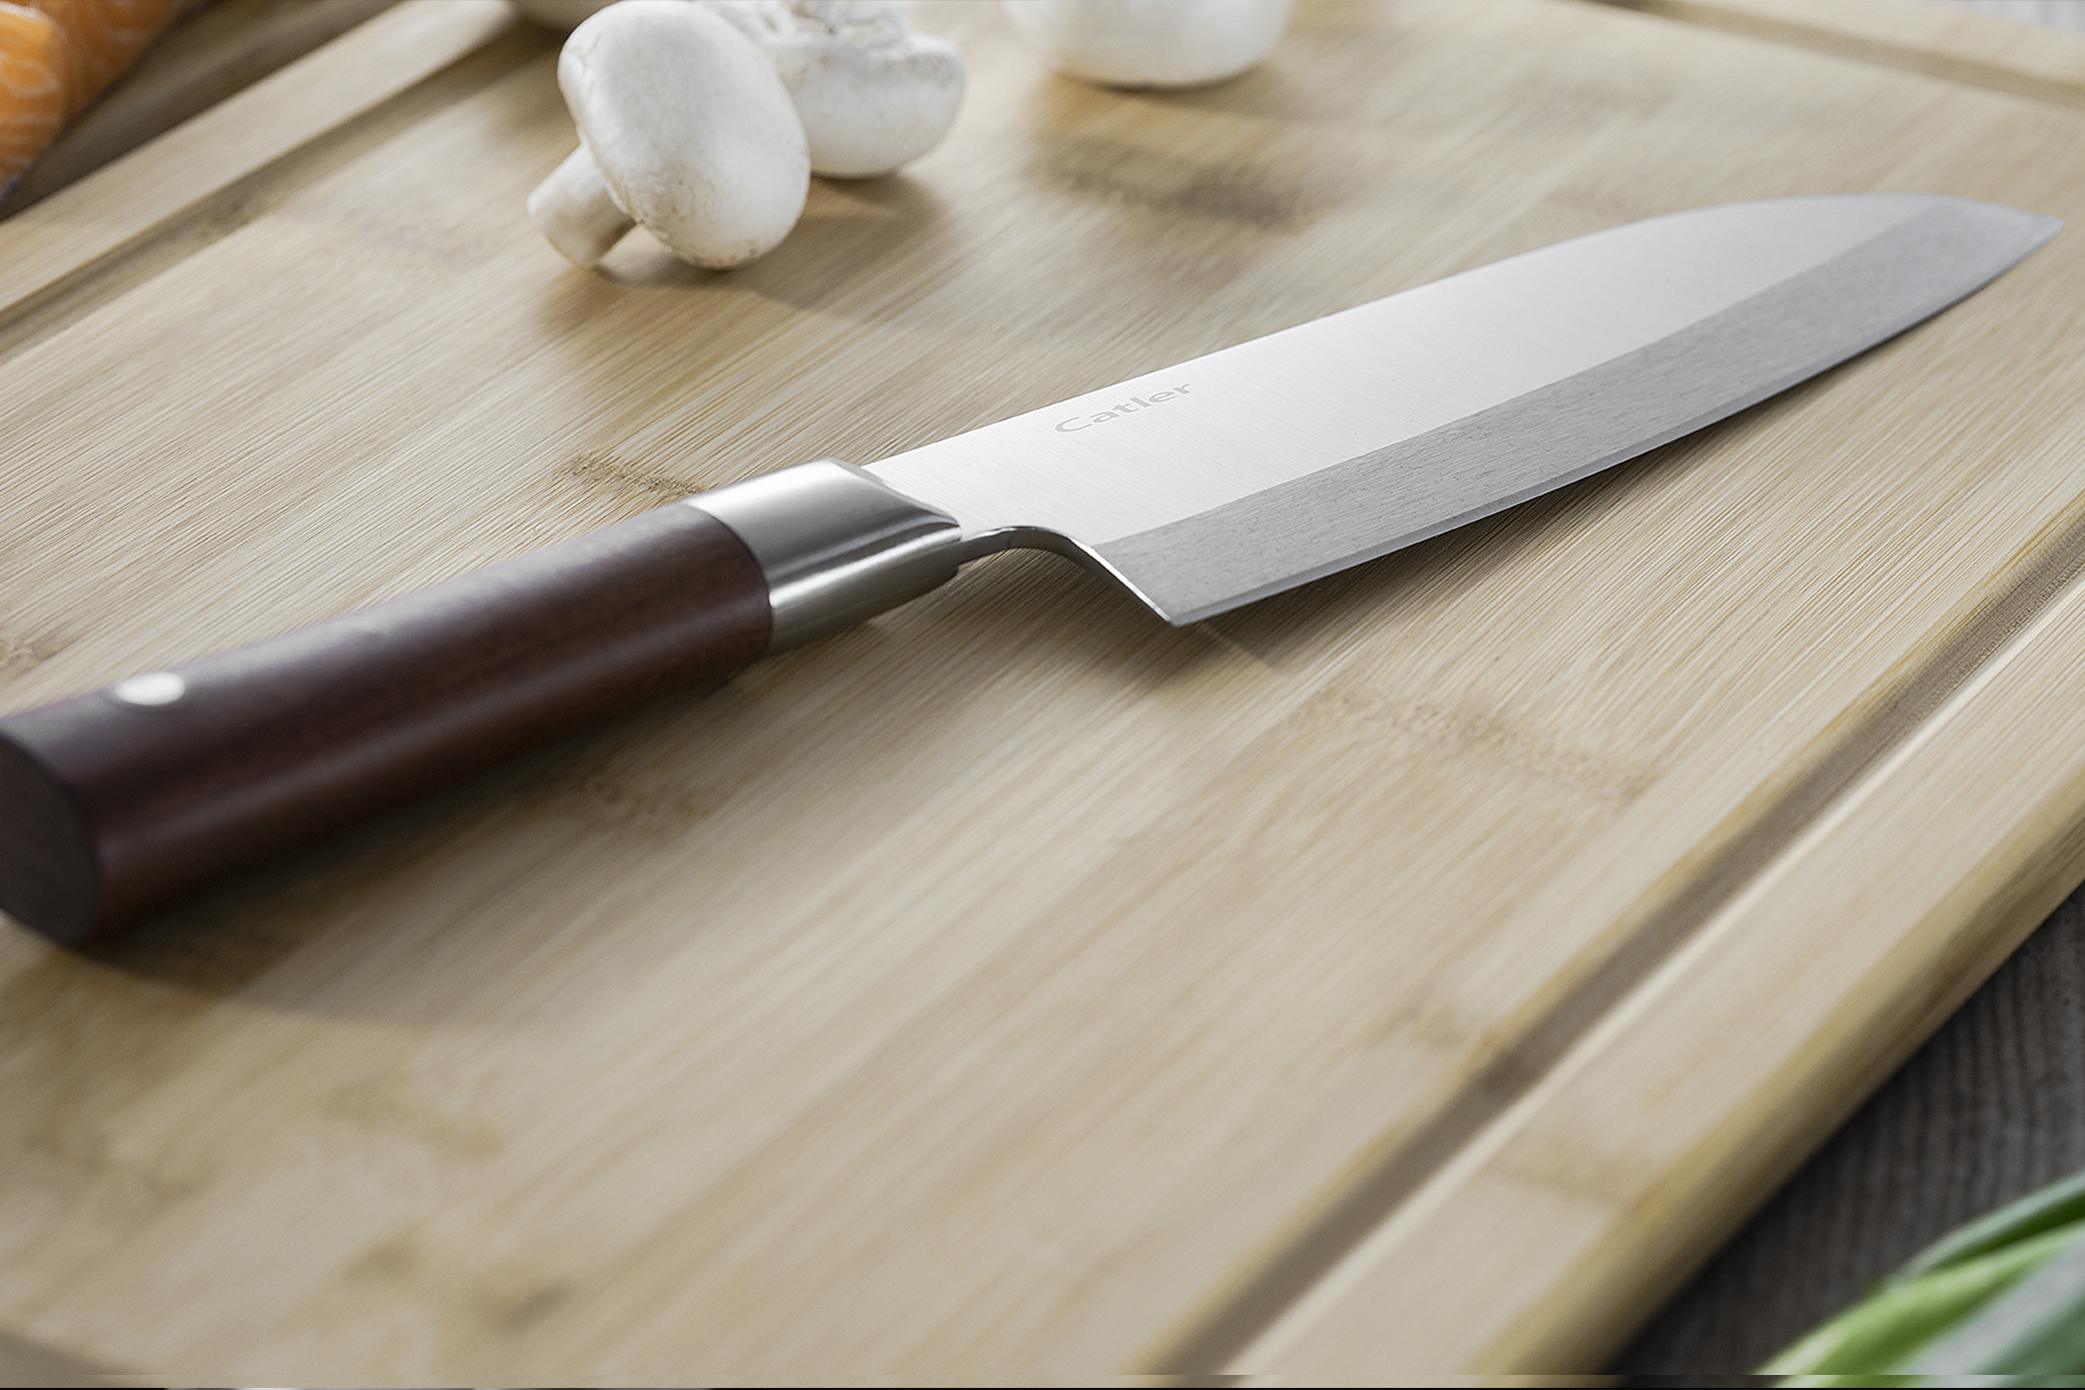 The Japanese Deba knife